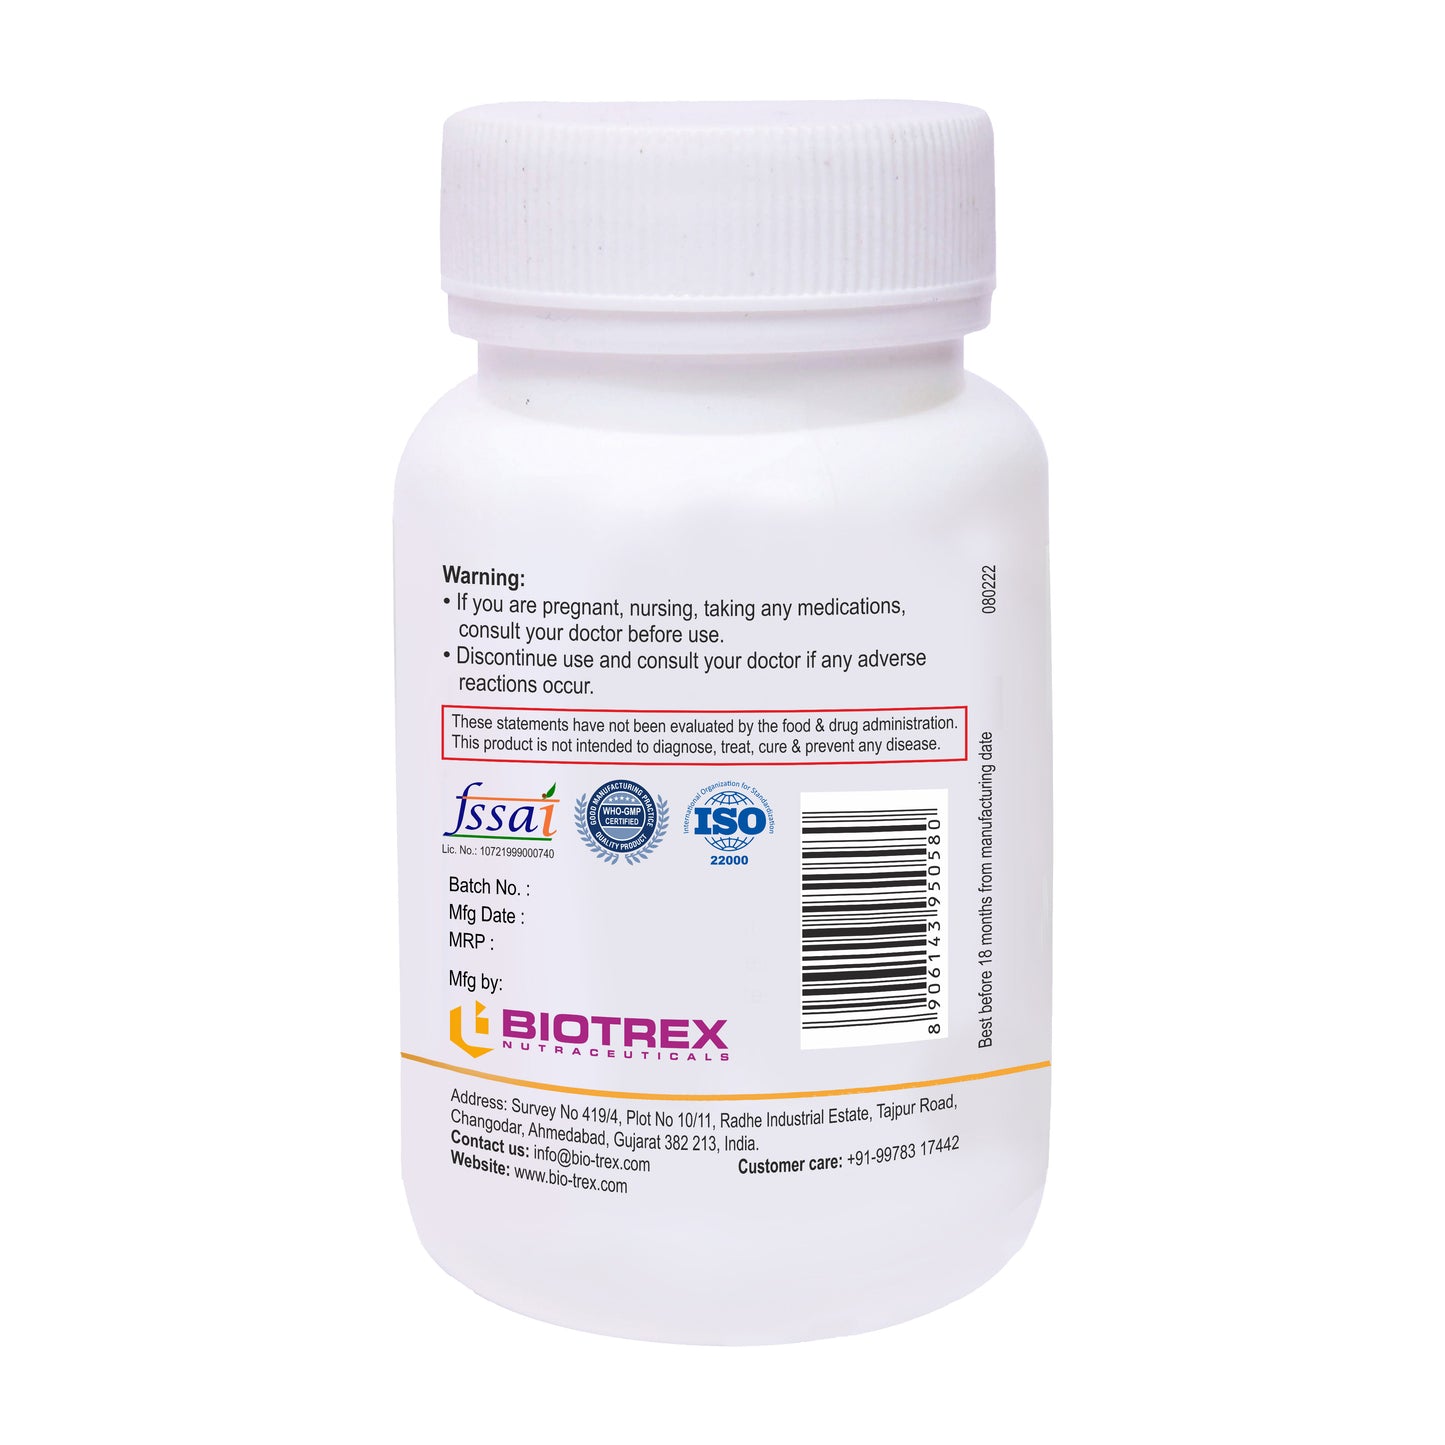 Biotrex L-Tryptophan 500mg - 60 Capsules